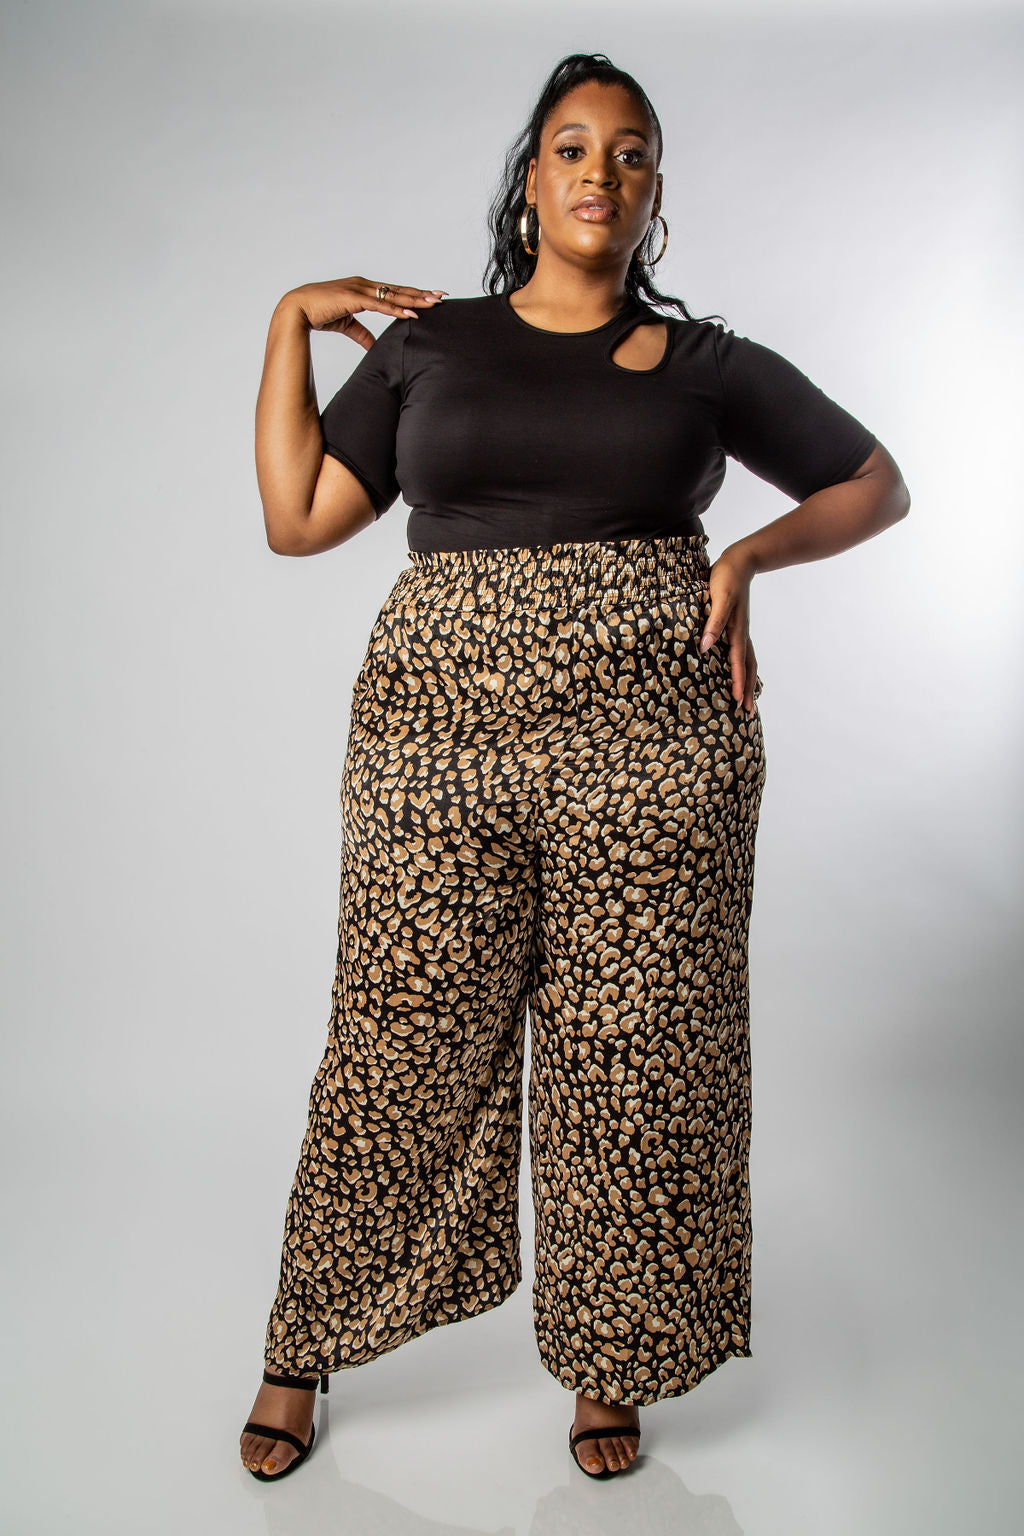 Leopard Print Pants Plus Woman  Leopard Print Pants Plus Size - Women  Casual Print - Aliexpress